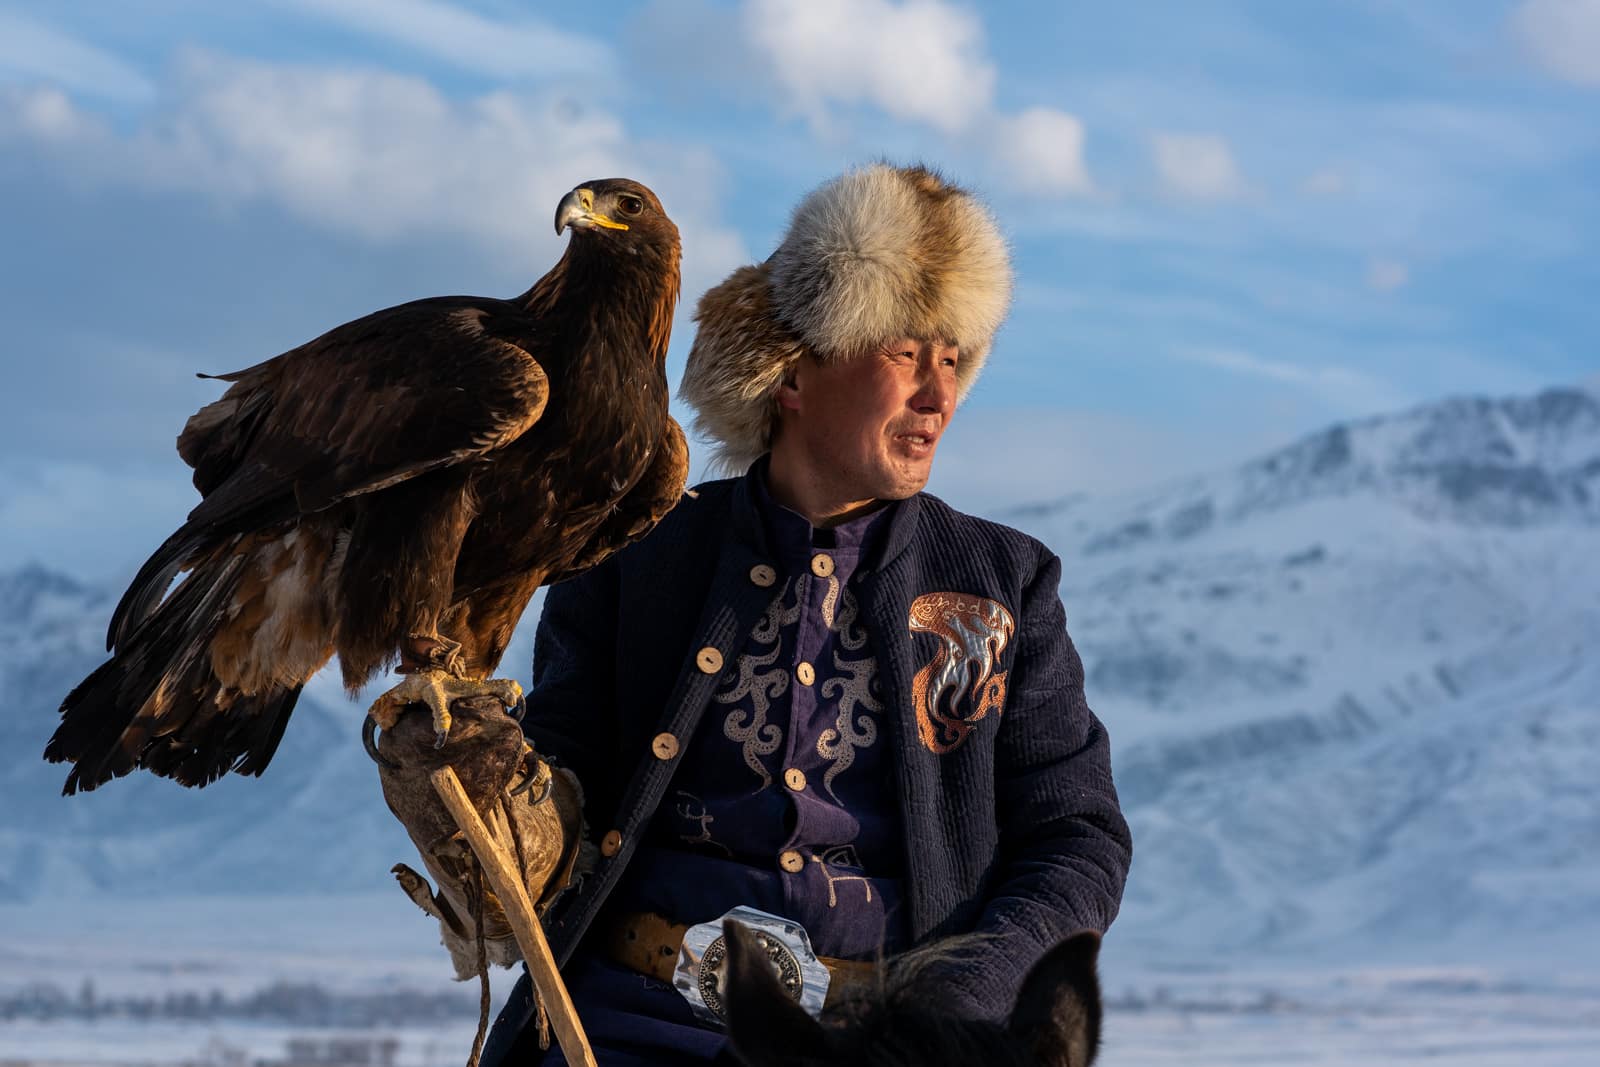 Salburuun eagle hunter in Kyrgyzstan in winter